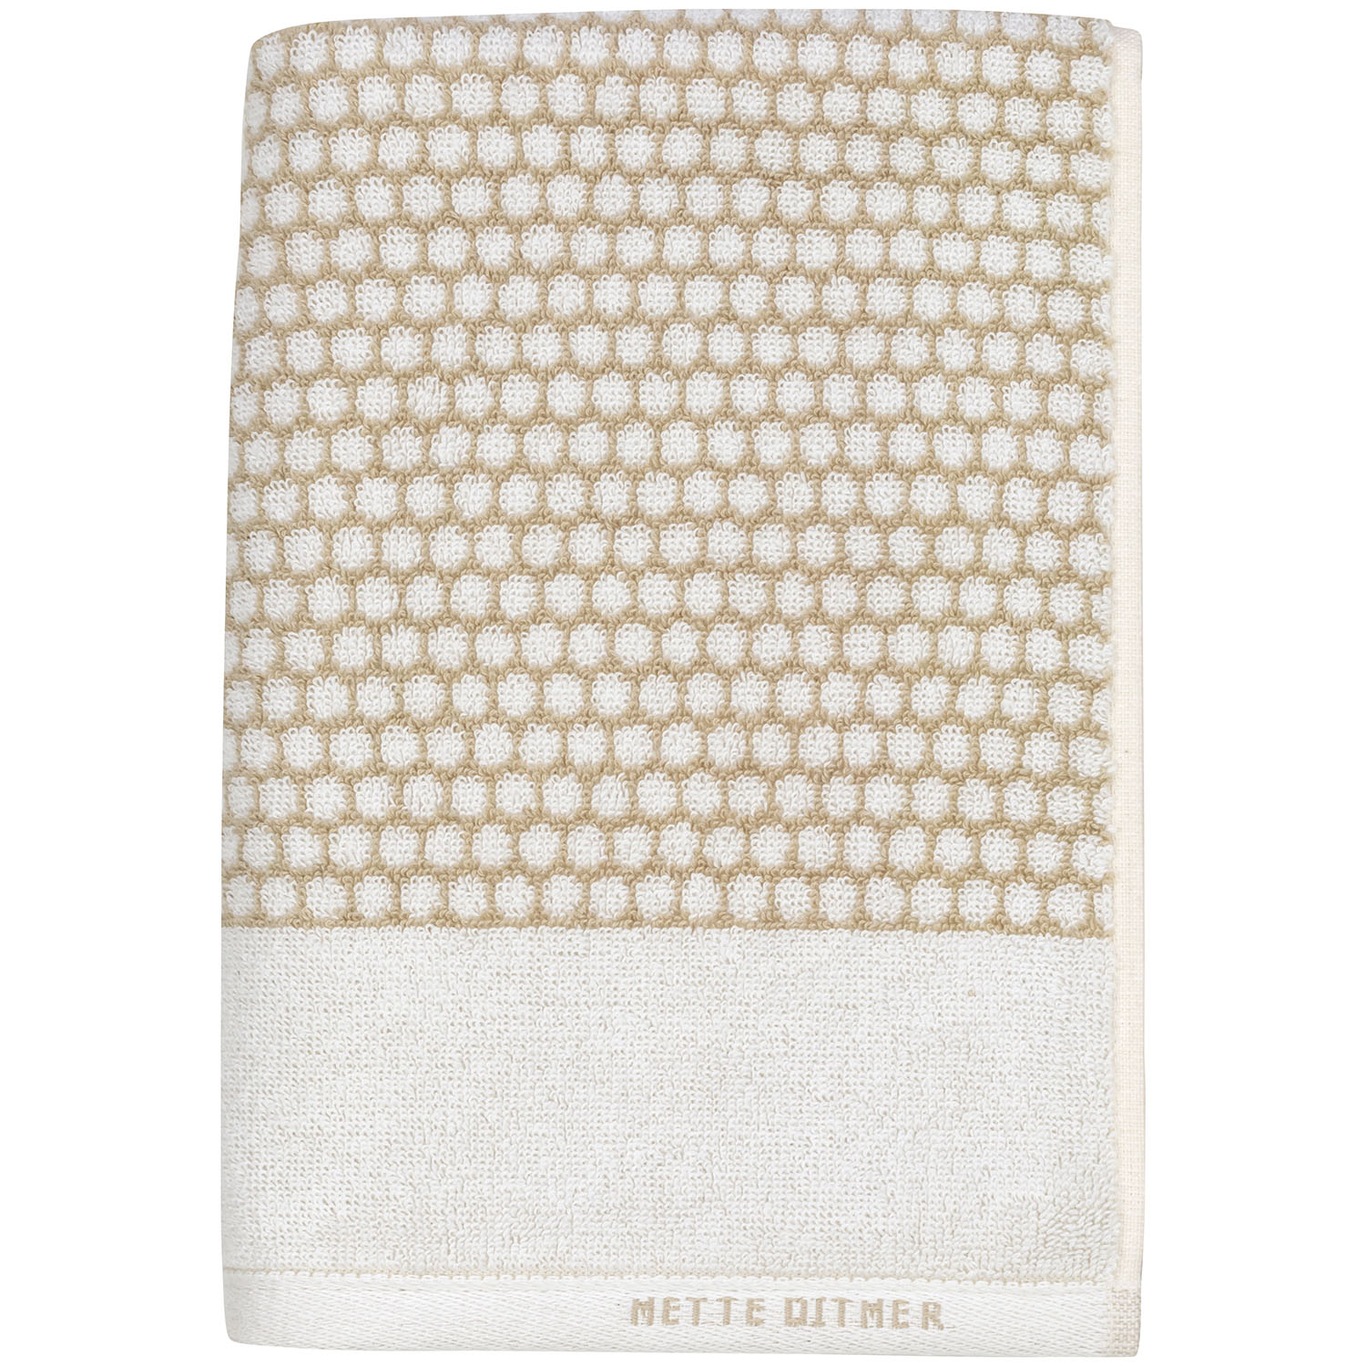 Grid Towel Sand, 100x50 cm